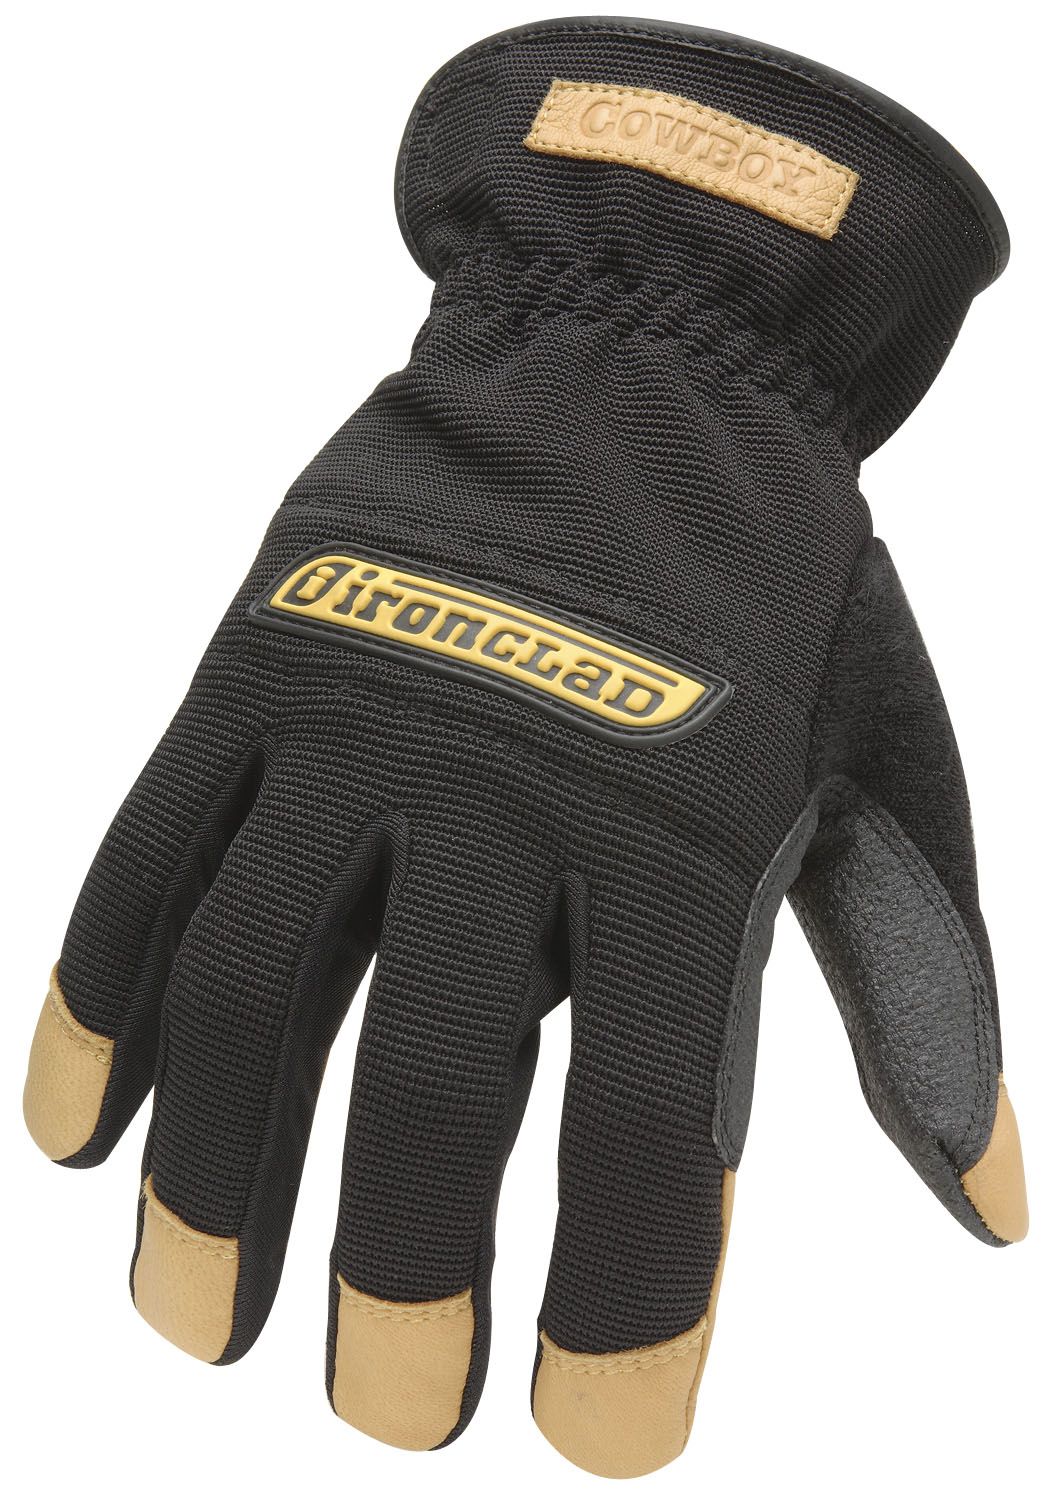 Ironclad Cowboy Gloves, Ironclad Landscaper Gloves